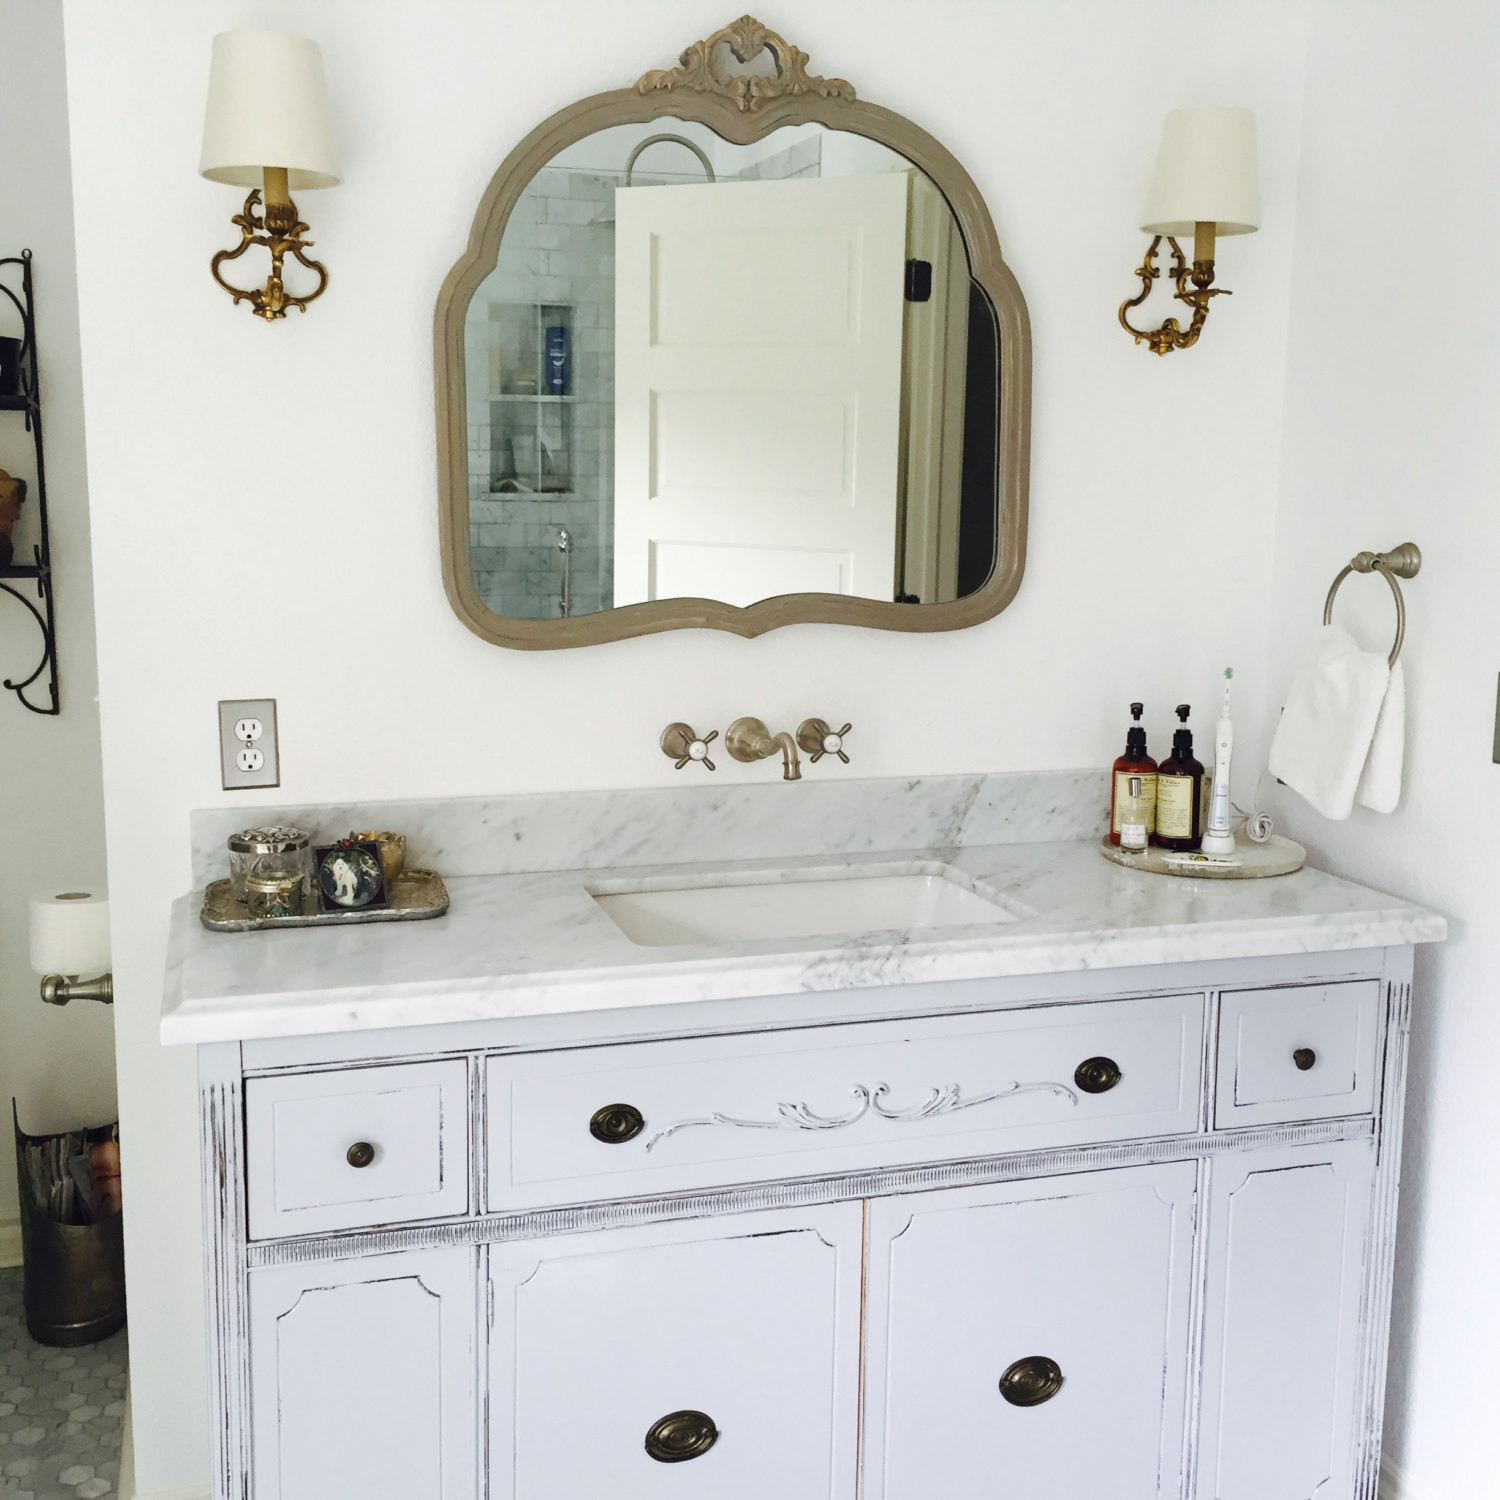 Shabby Chic Bathroom Vanity
 BATHROOM VANITY For Double or Single Sink We Custom